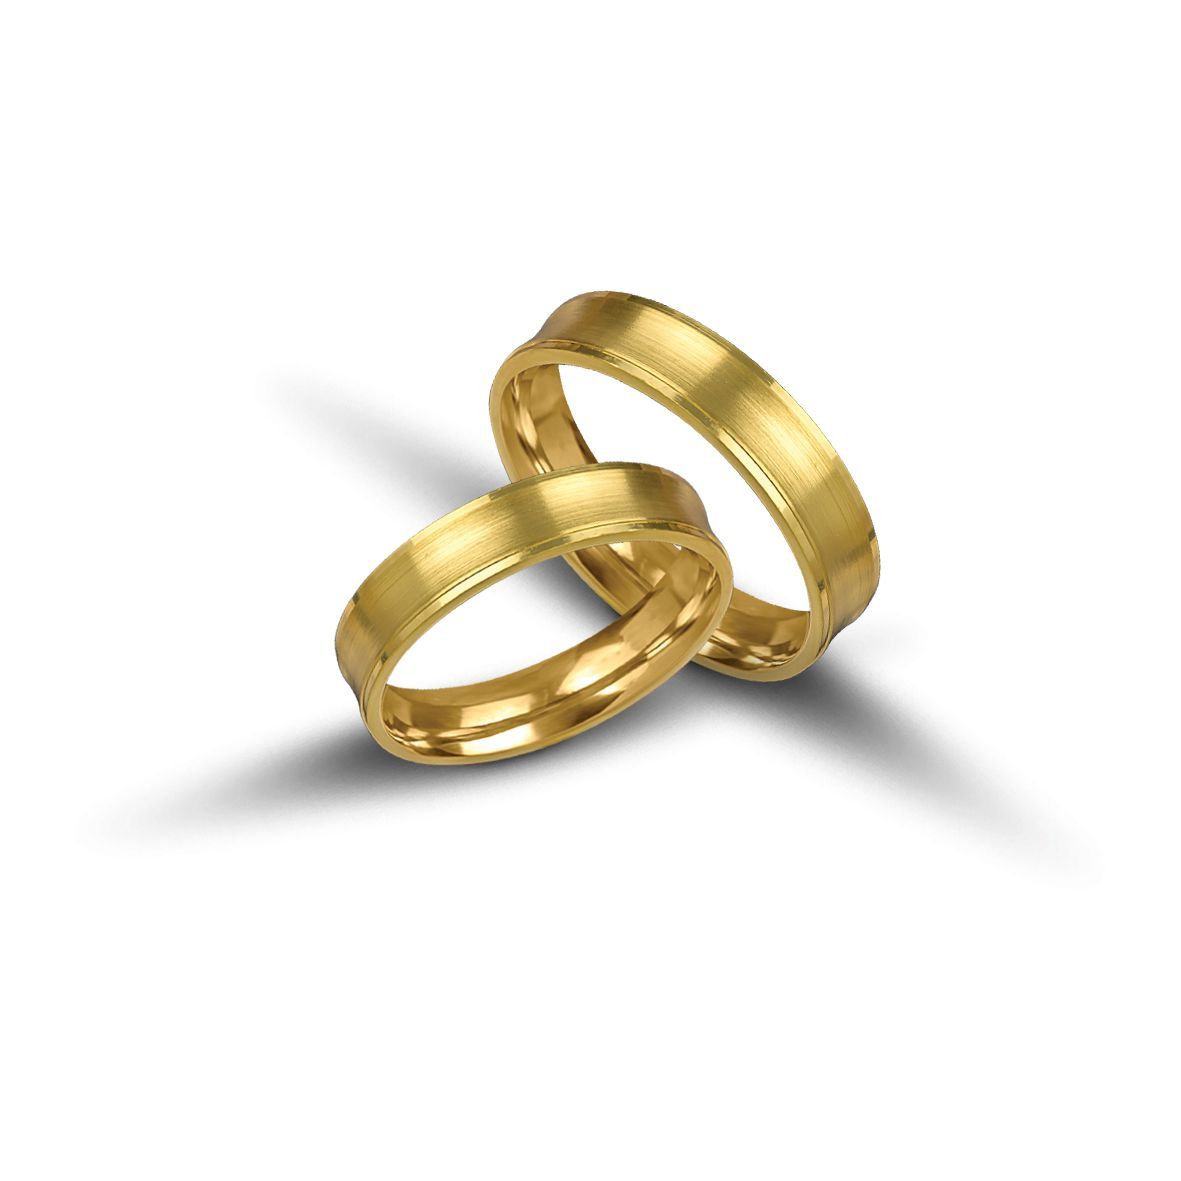 Golden wedding rings (code VK2021/50)